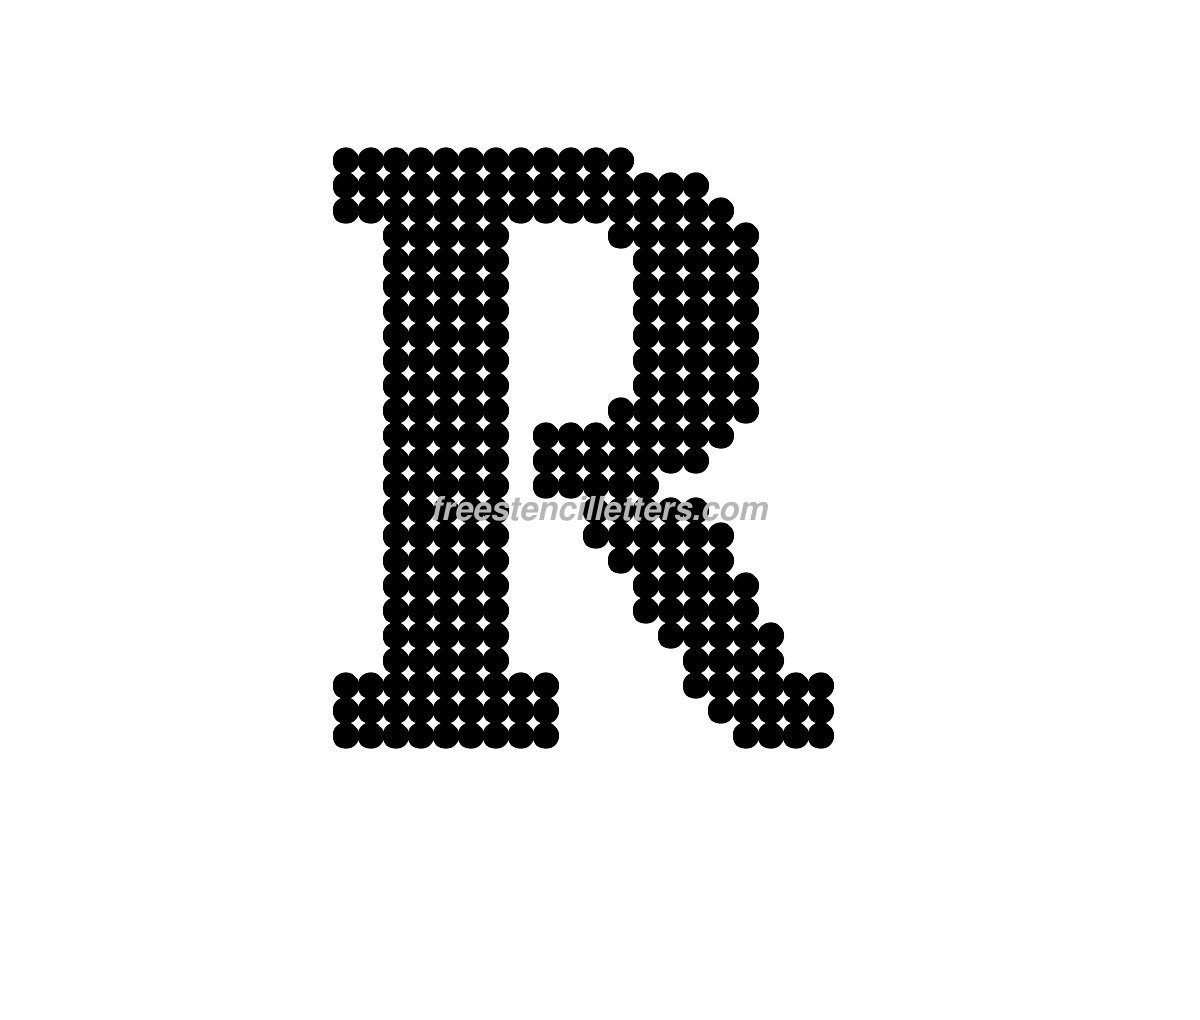 Print R Letter Stencil